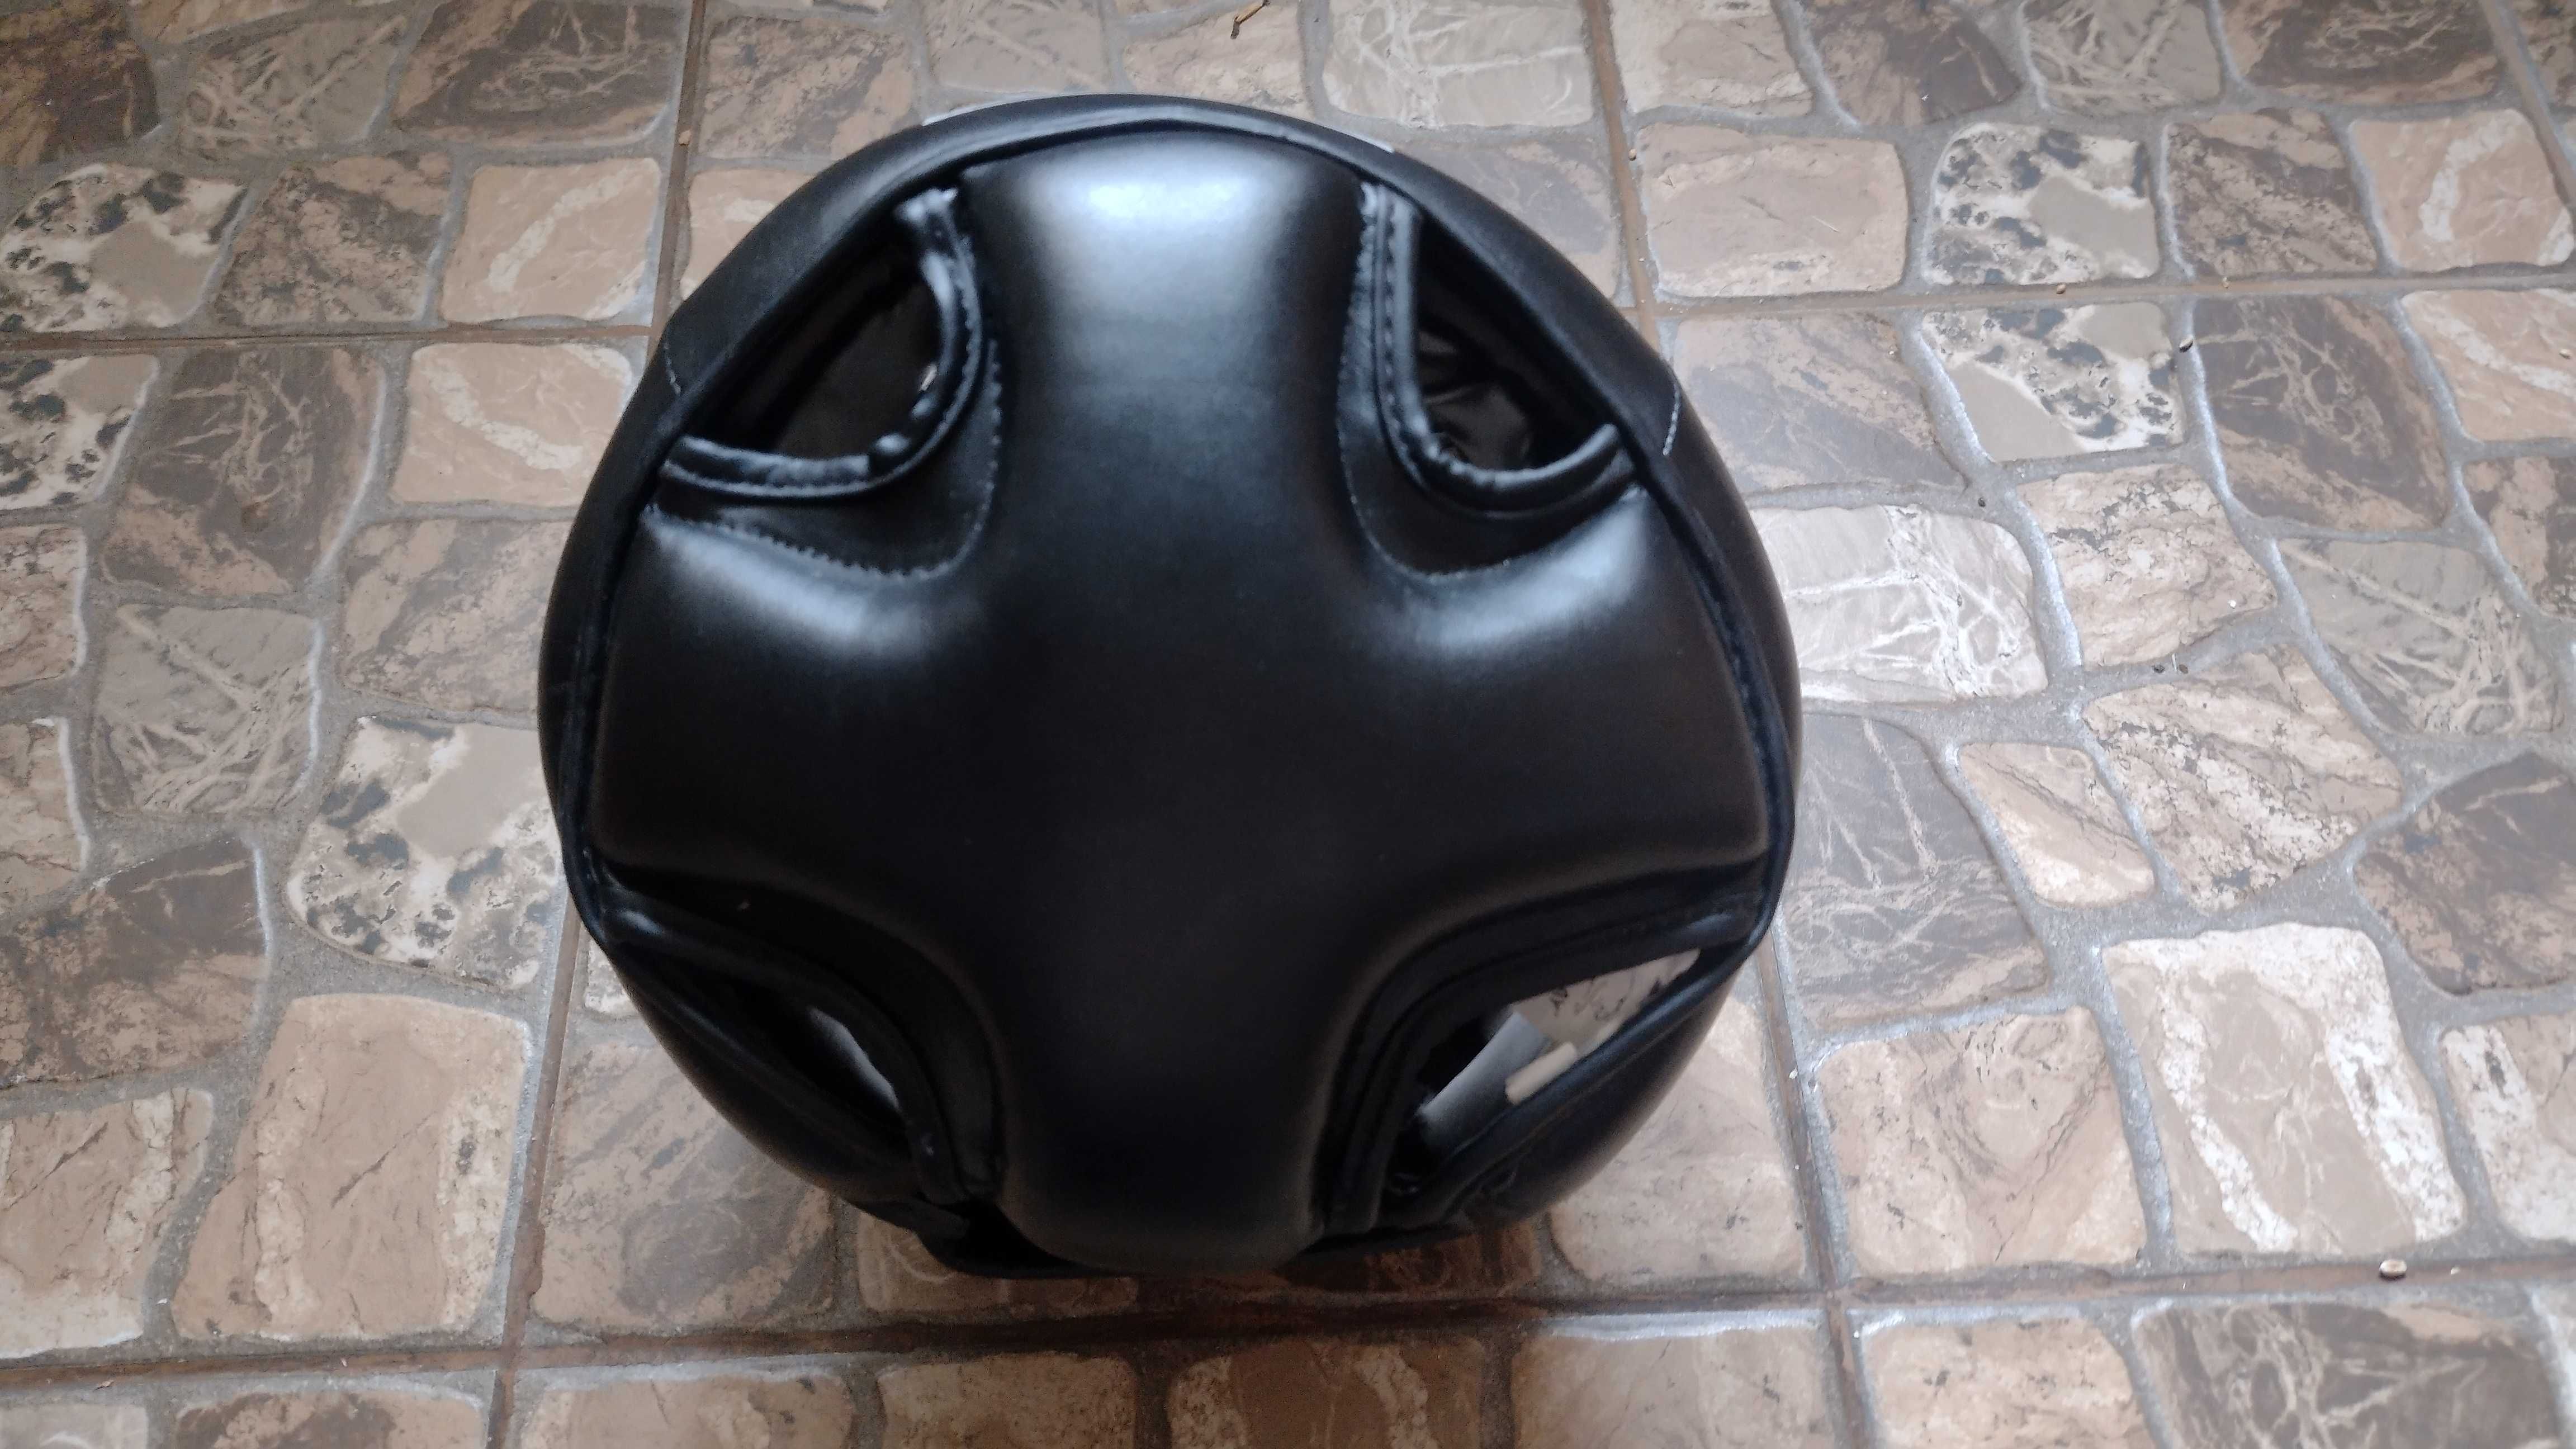 Шлем боксерский PowerPlay 3045 black